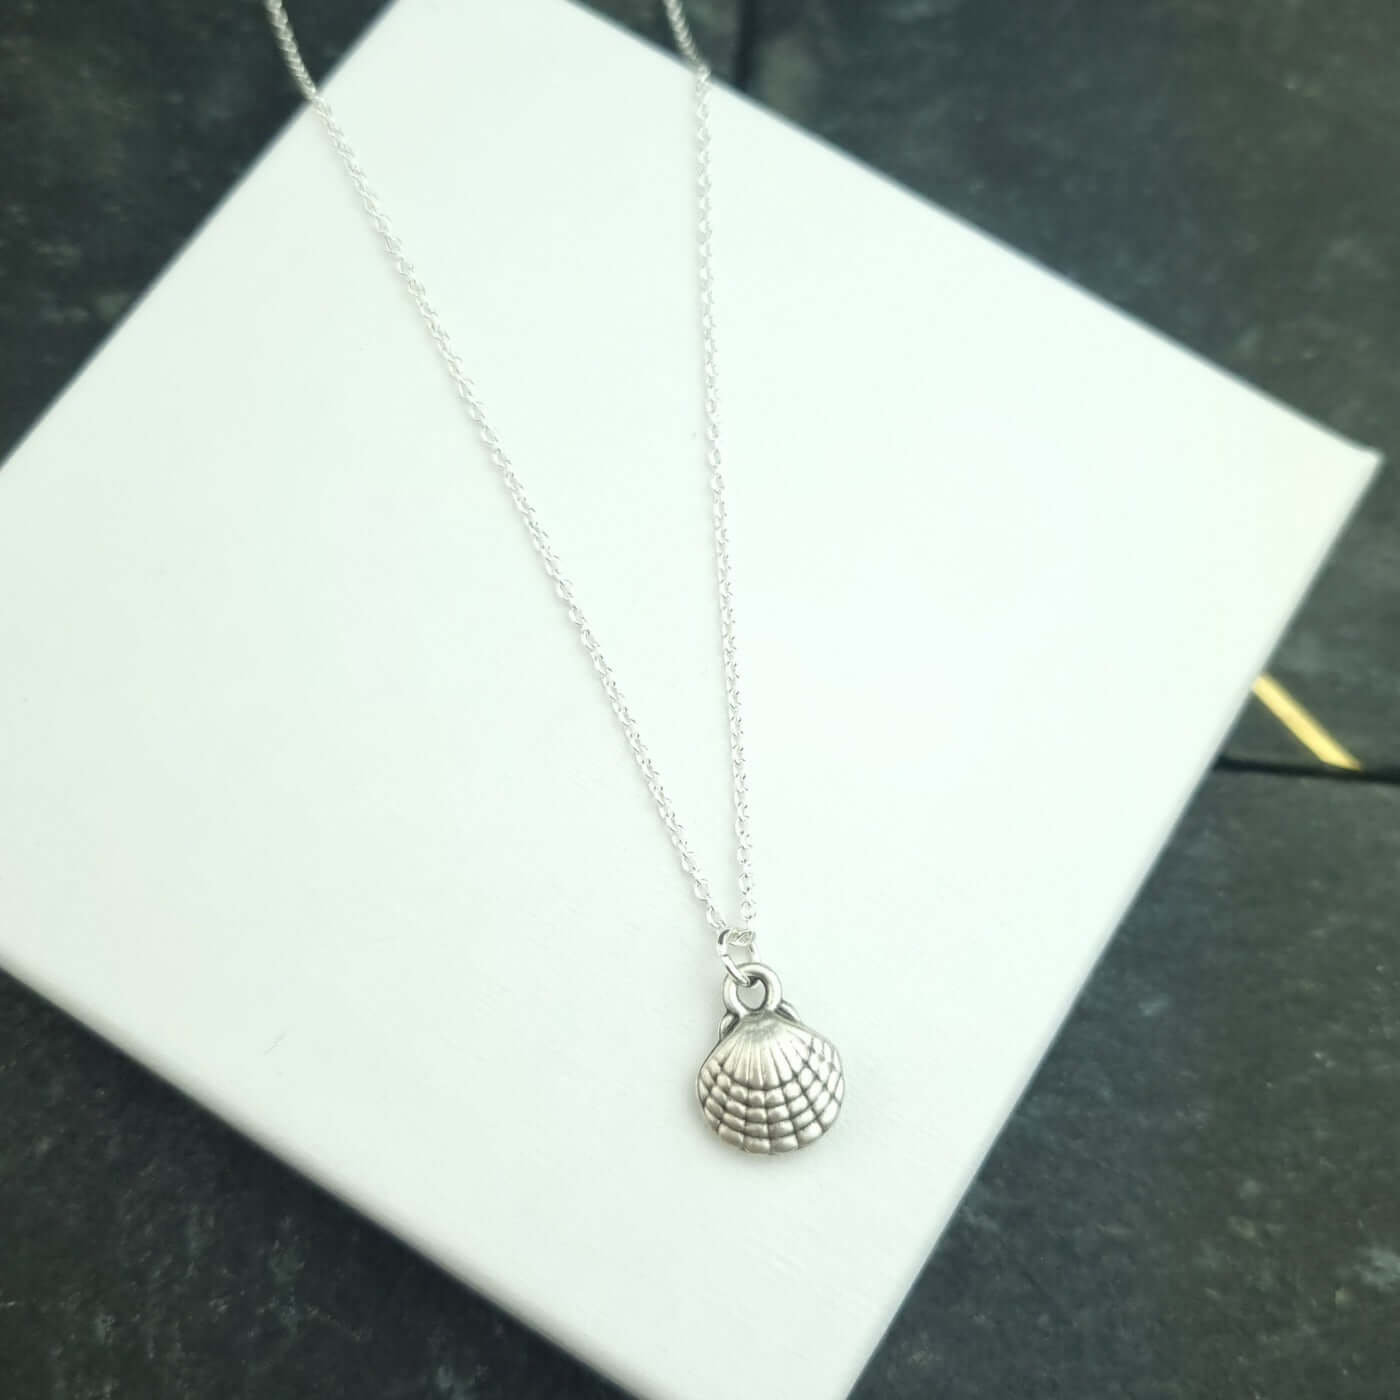 Seashell pendant in a silver chain